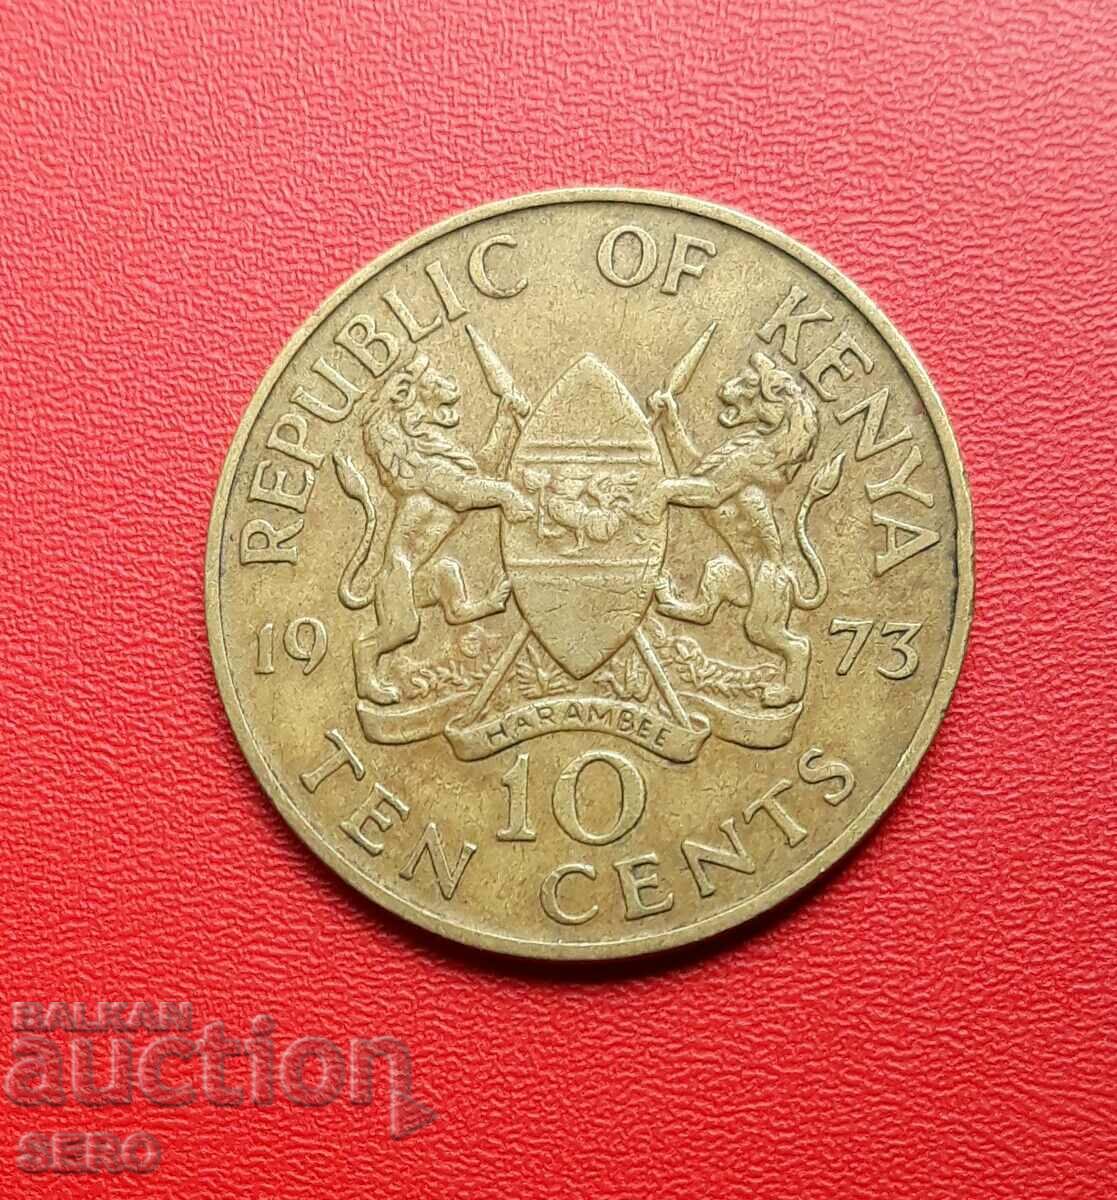 Kenya-10 cent 1973